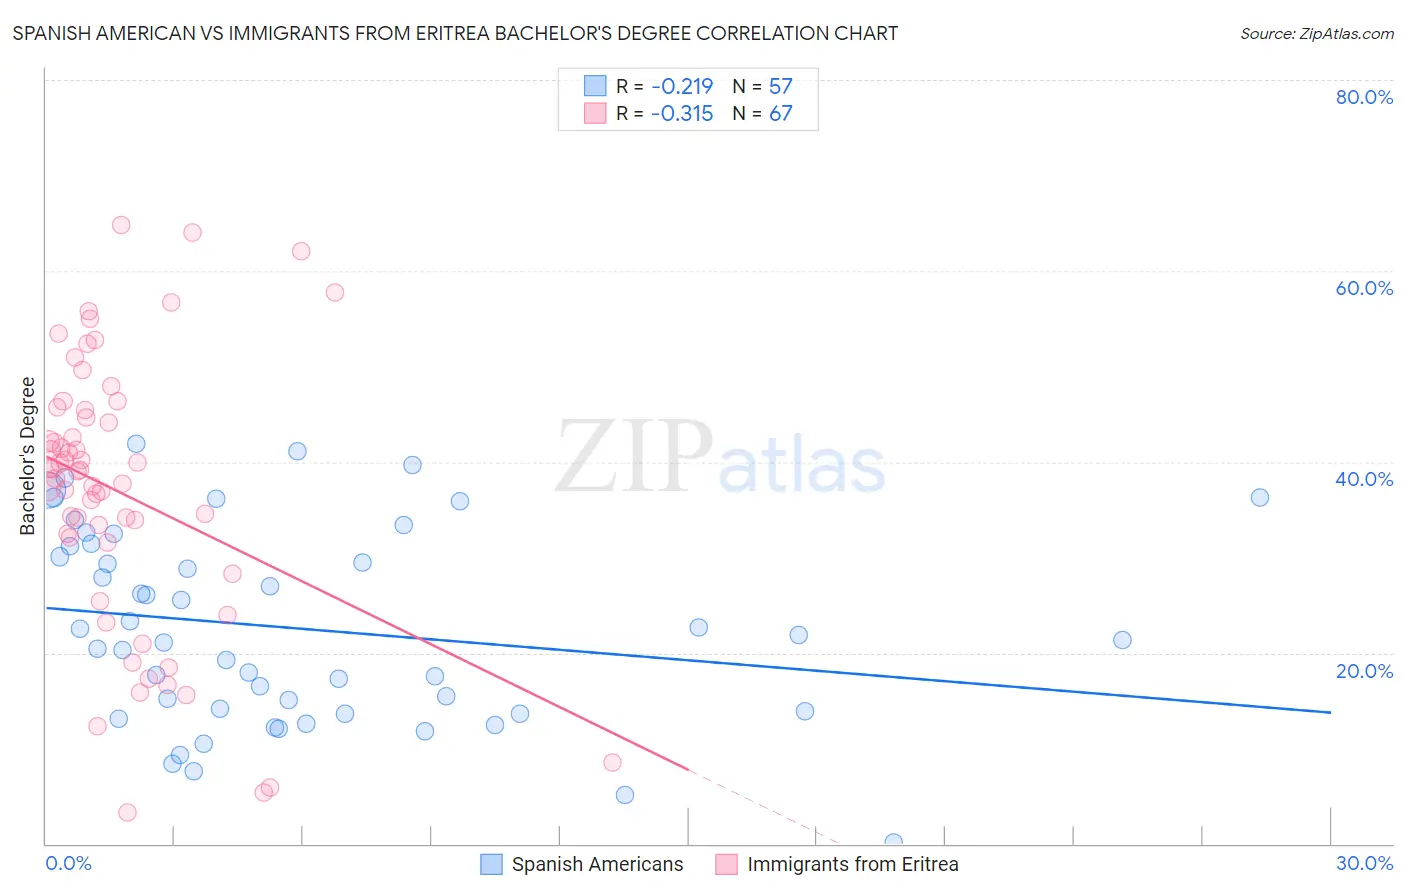 Spanish American vs Immigrants from Eritrea Bachelor's Degree